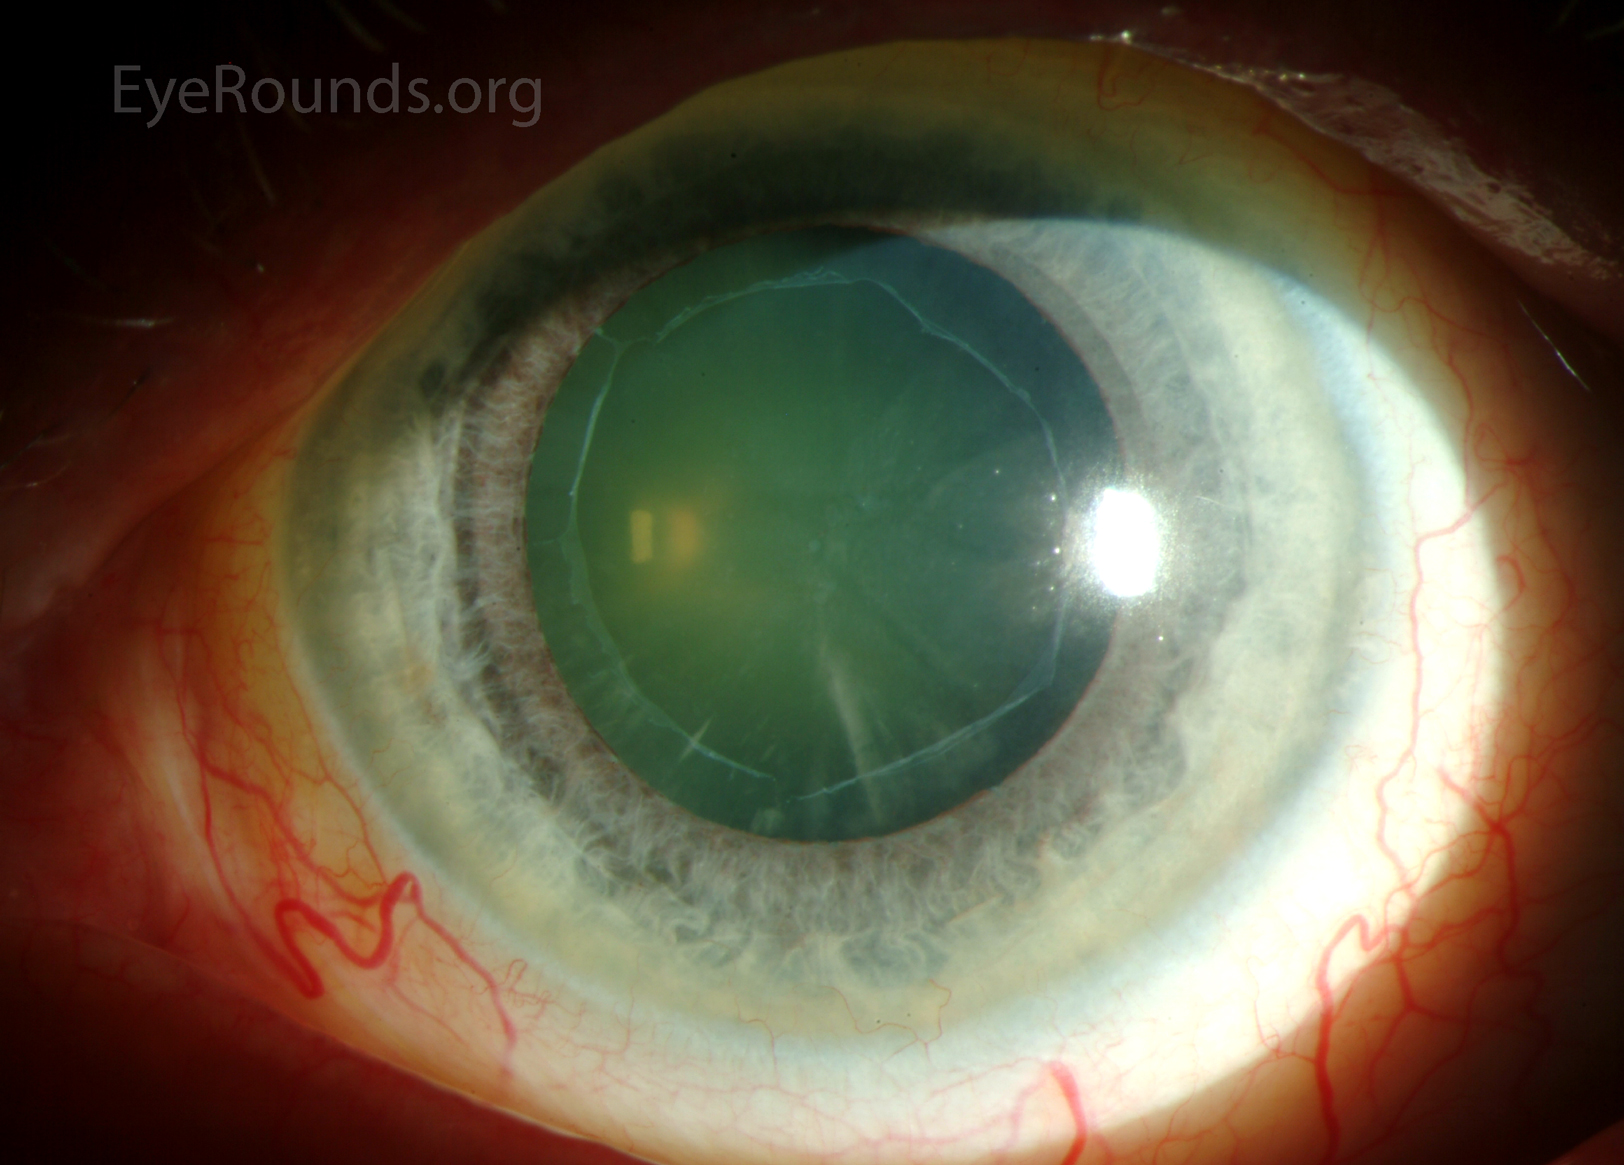 Exfoliative material on the pupillary margin and anterior lens capsule